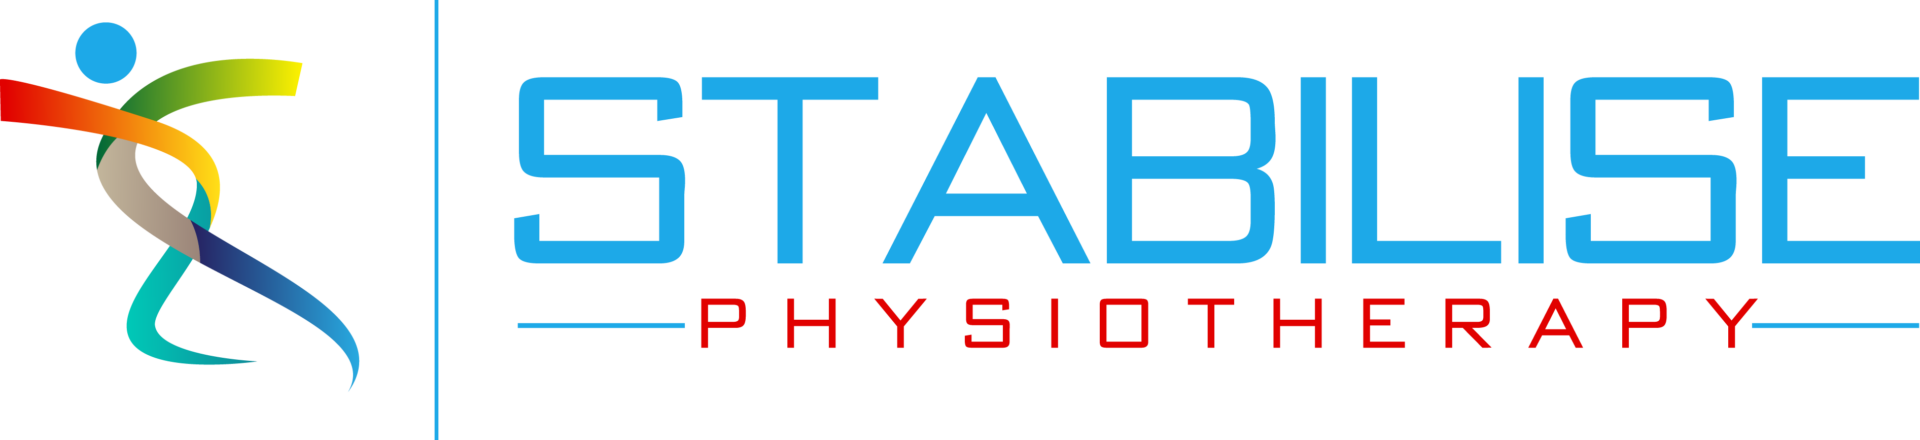 Stabilise Physiotherapy_FA_landscape